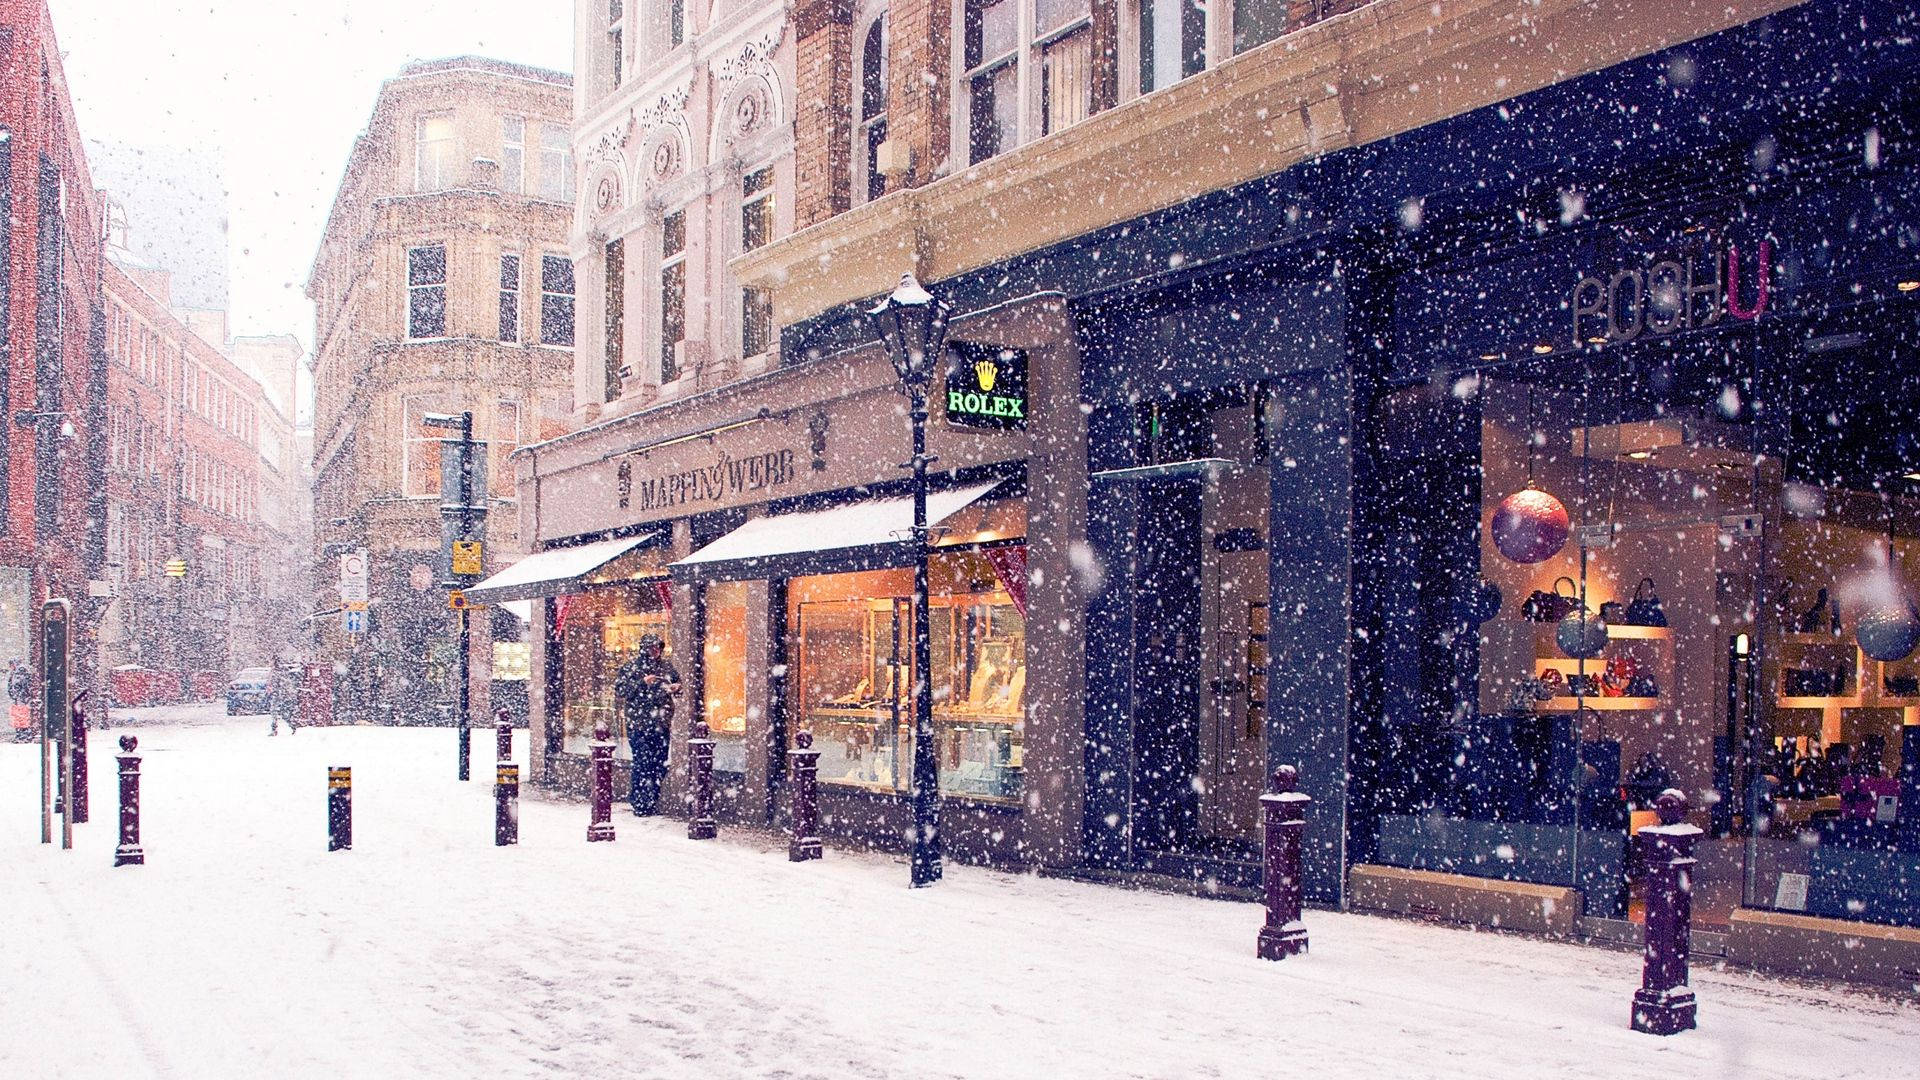 Snowy Shopping Malls